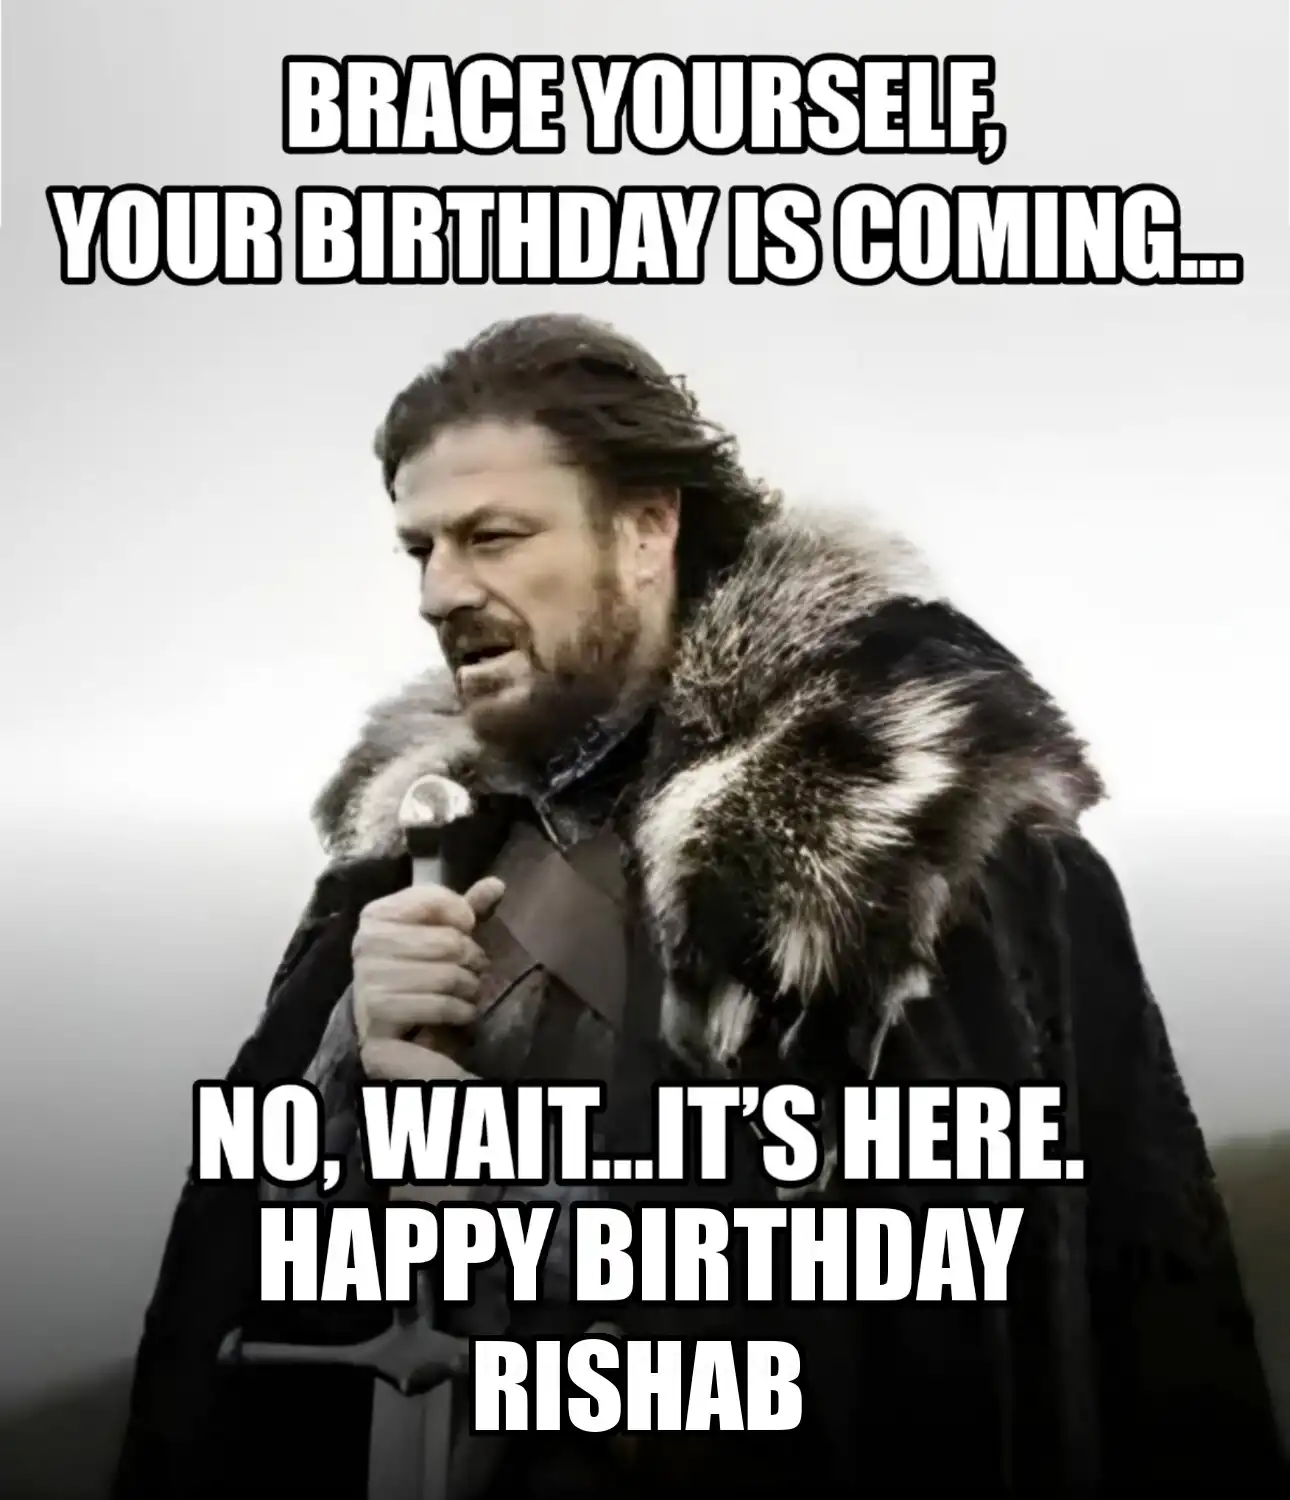 Happy Birthday Rishab Brace Yourself Your Birthday Is Coming Meme